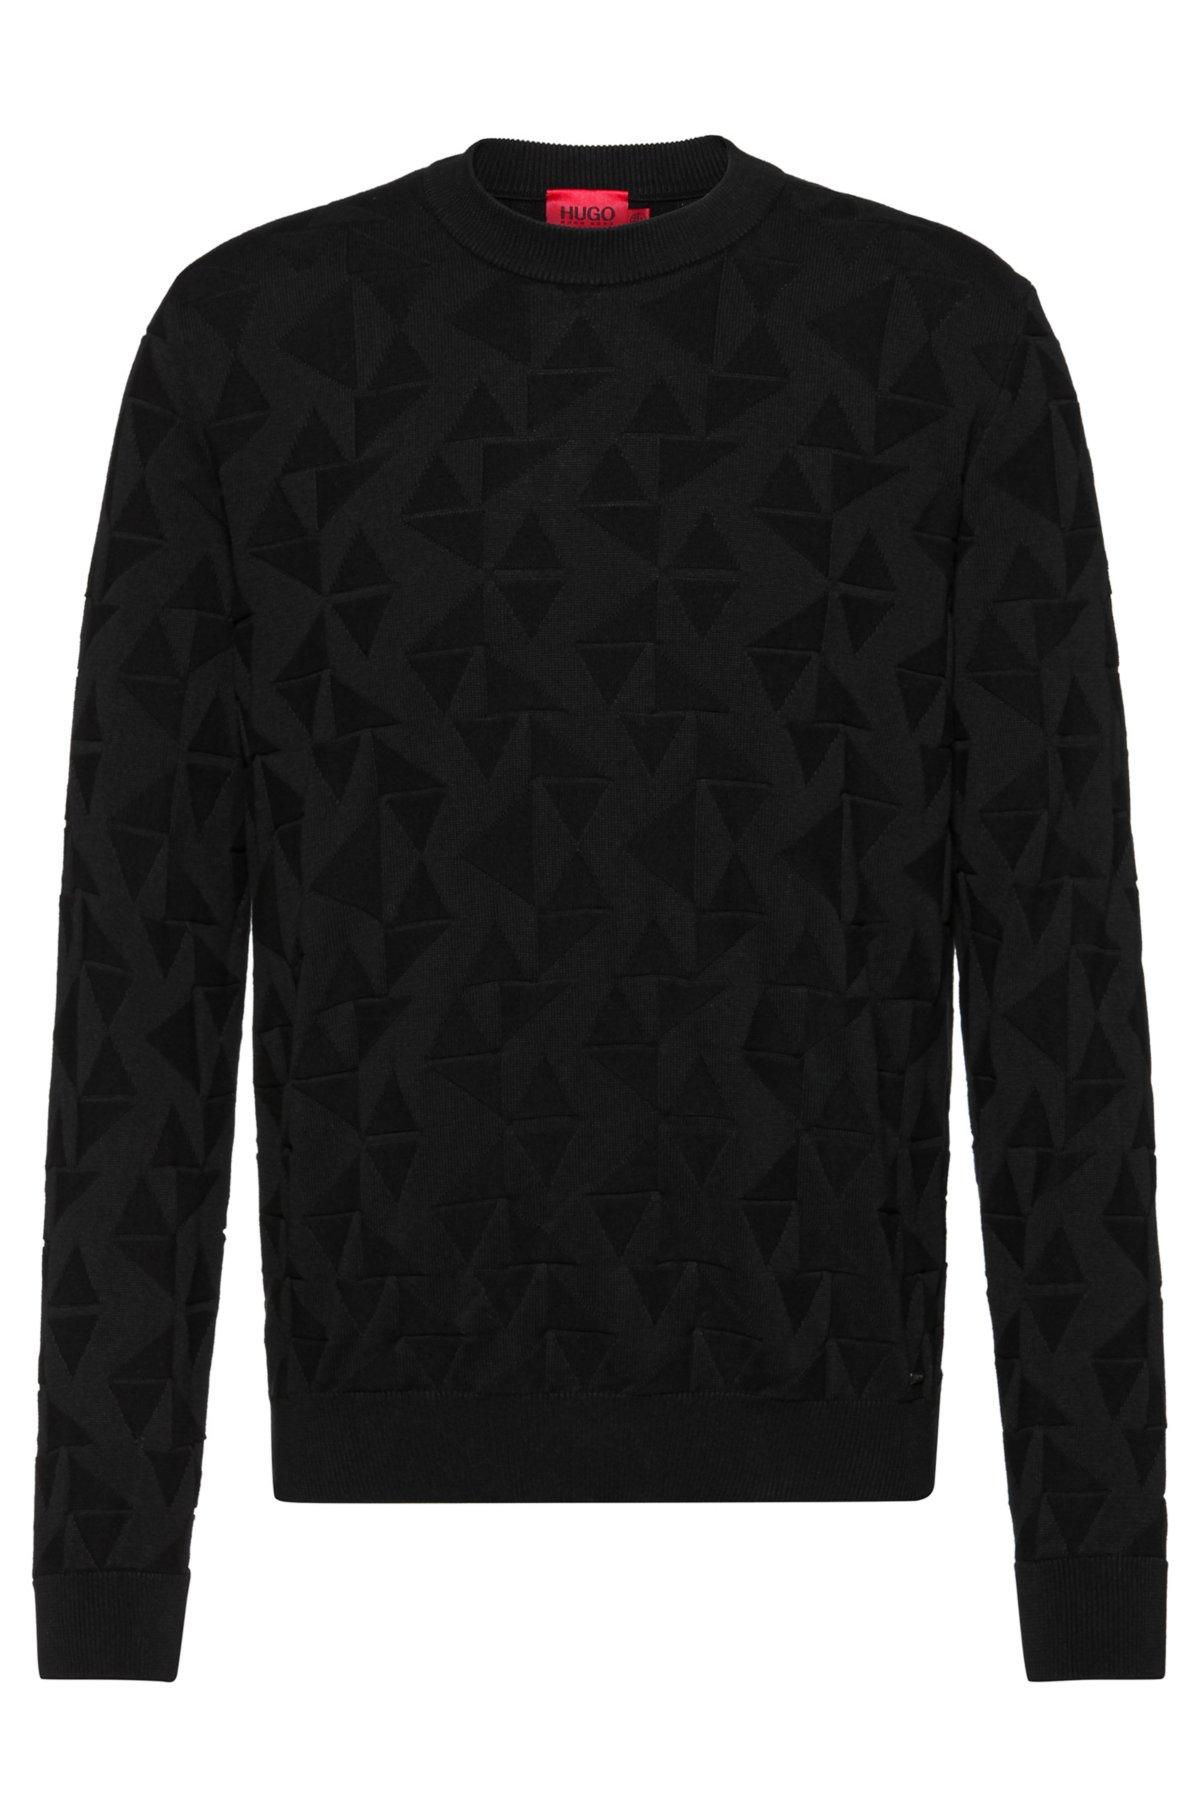 Louis Vuitton Men's Black Cotton Allover Logos Printed T-Shirt size L